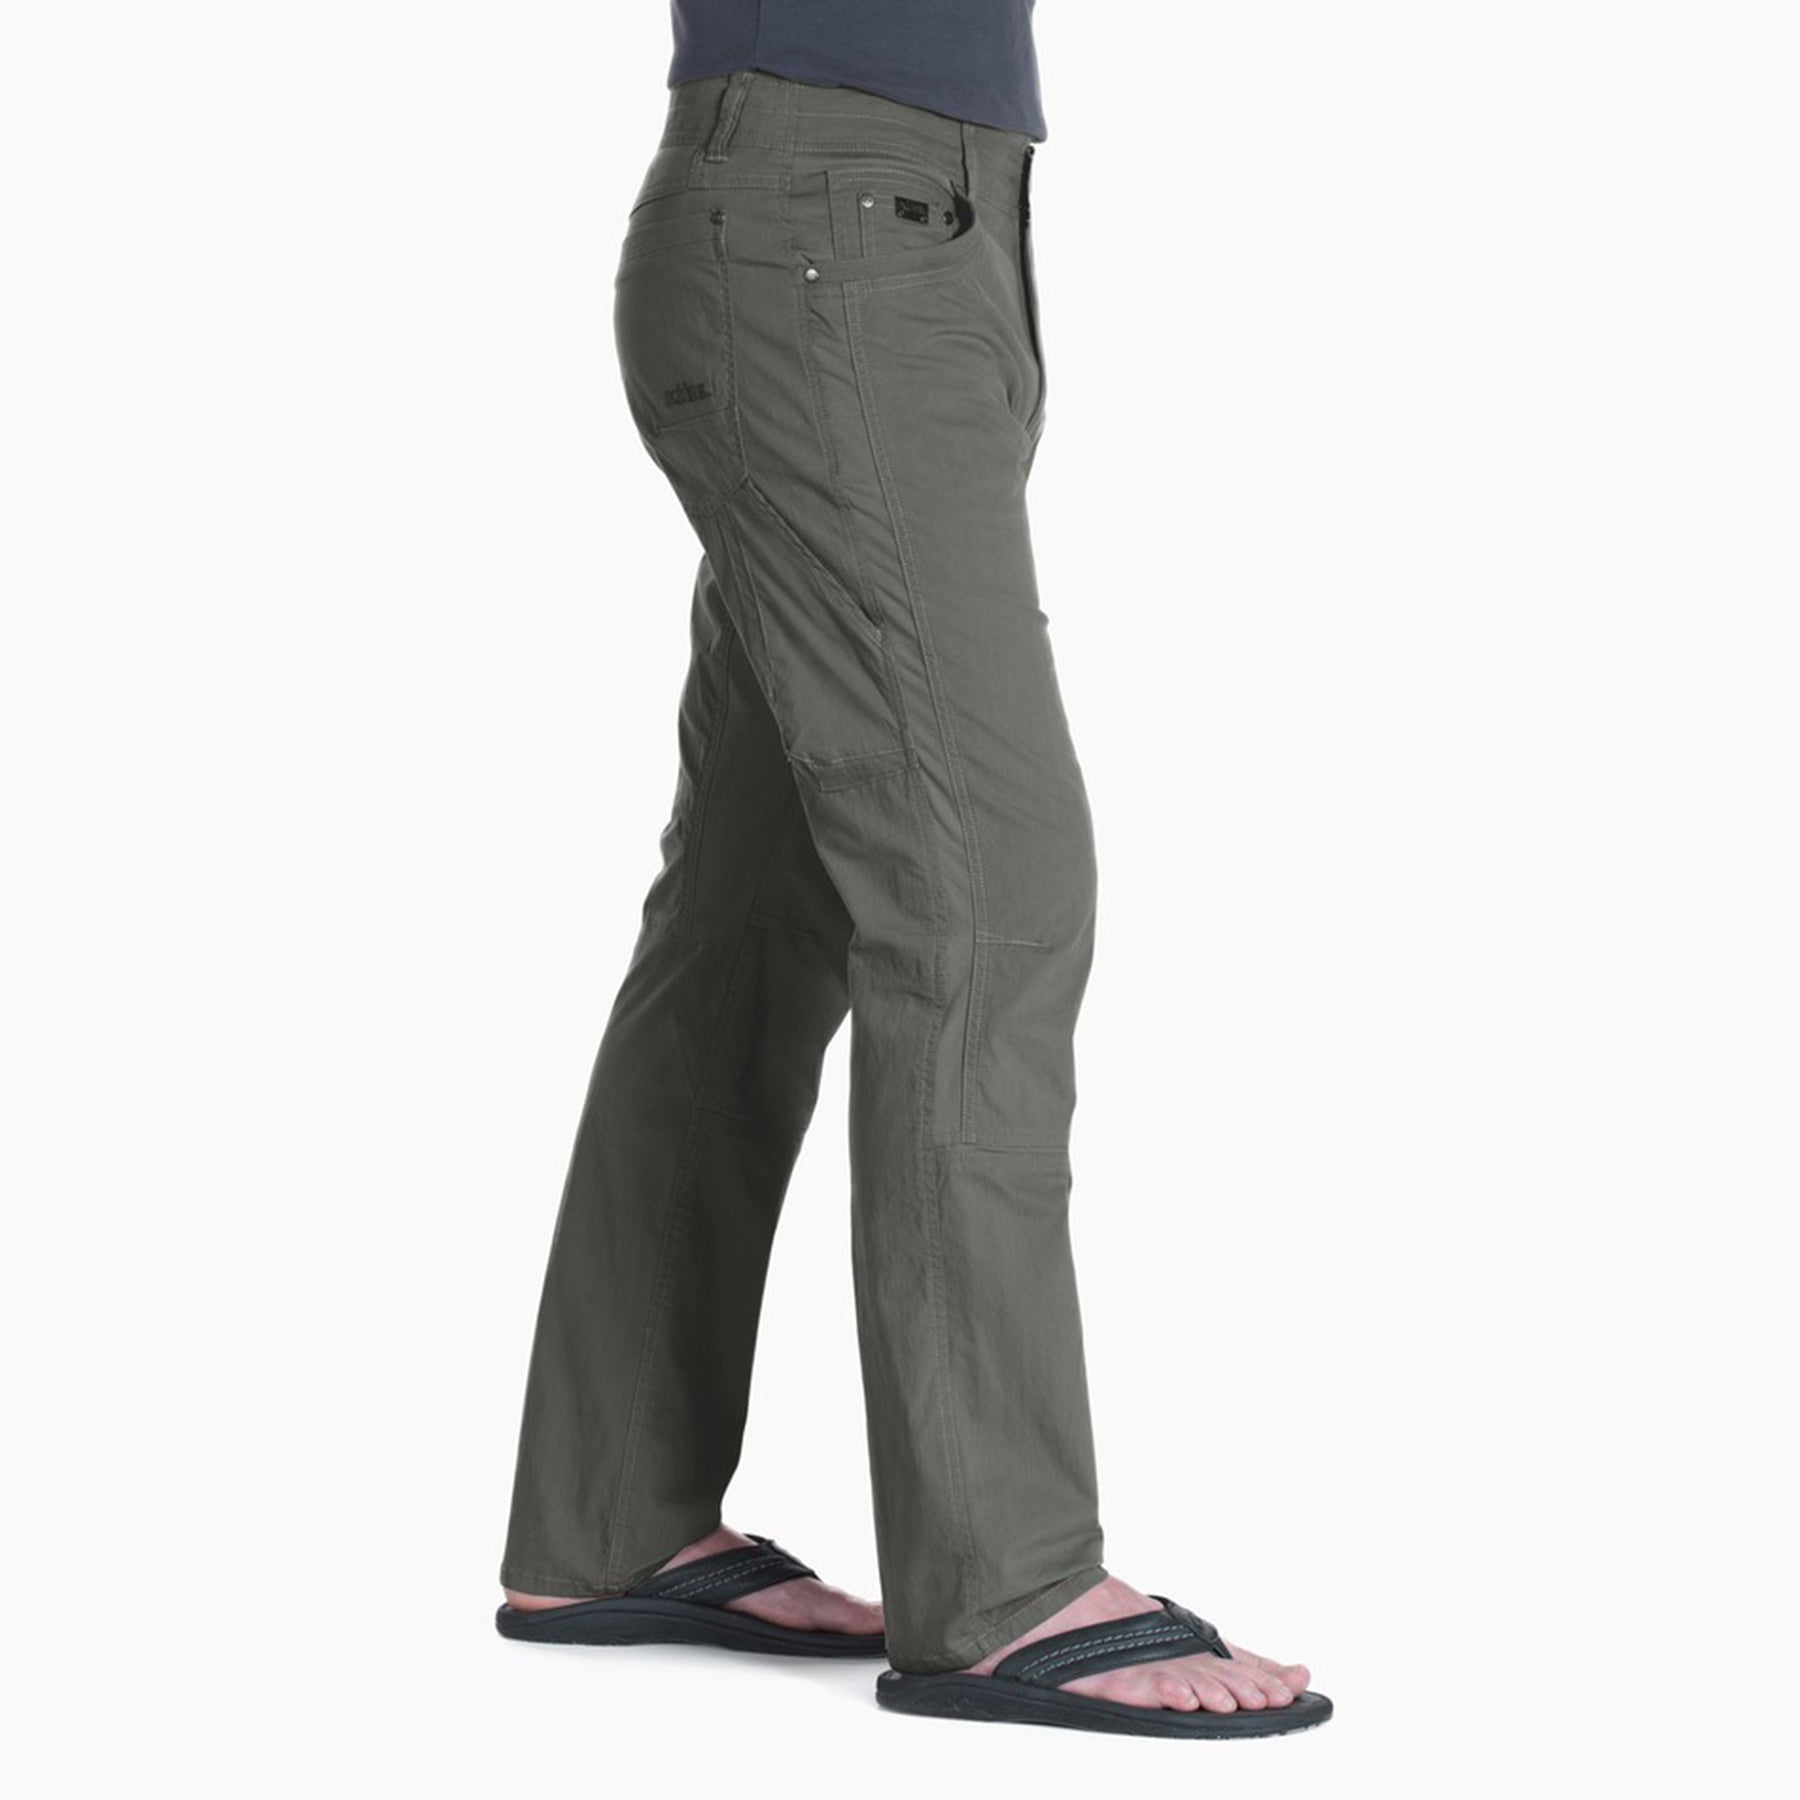 kuhl radikl pants mens on model side view in color green